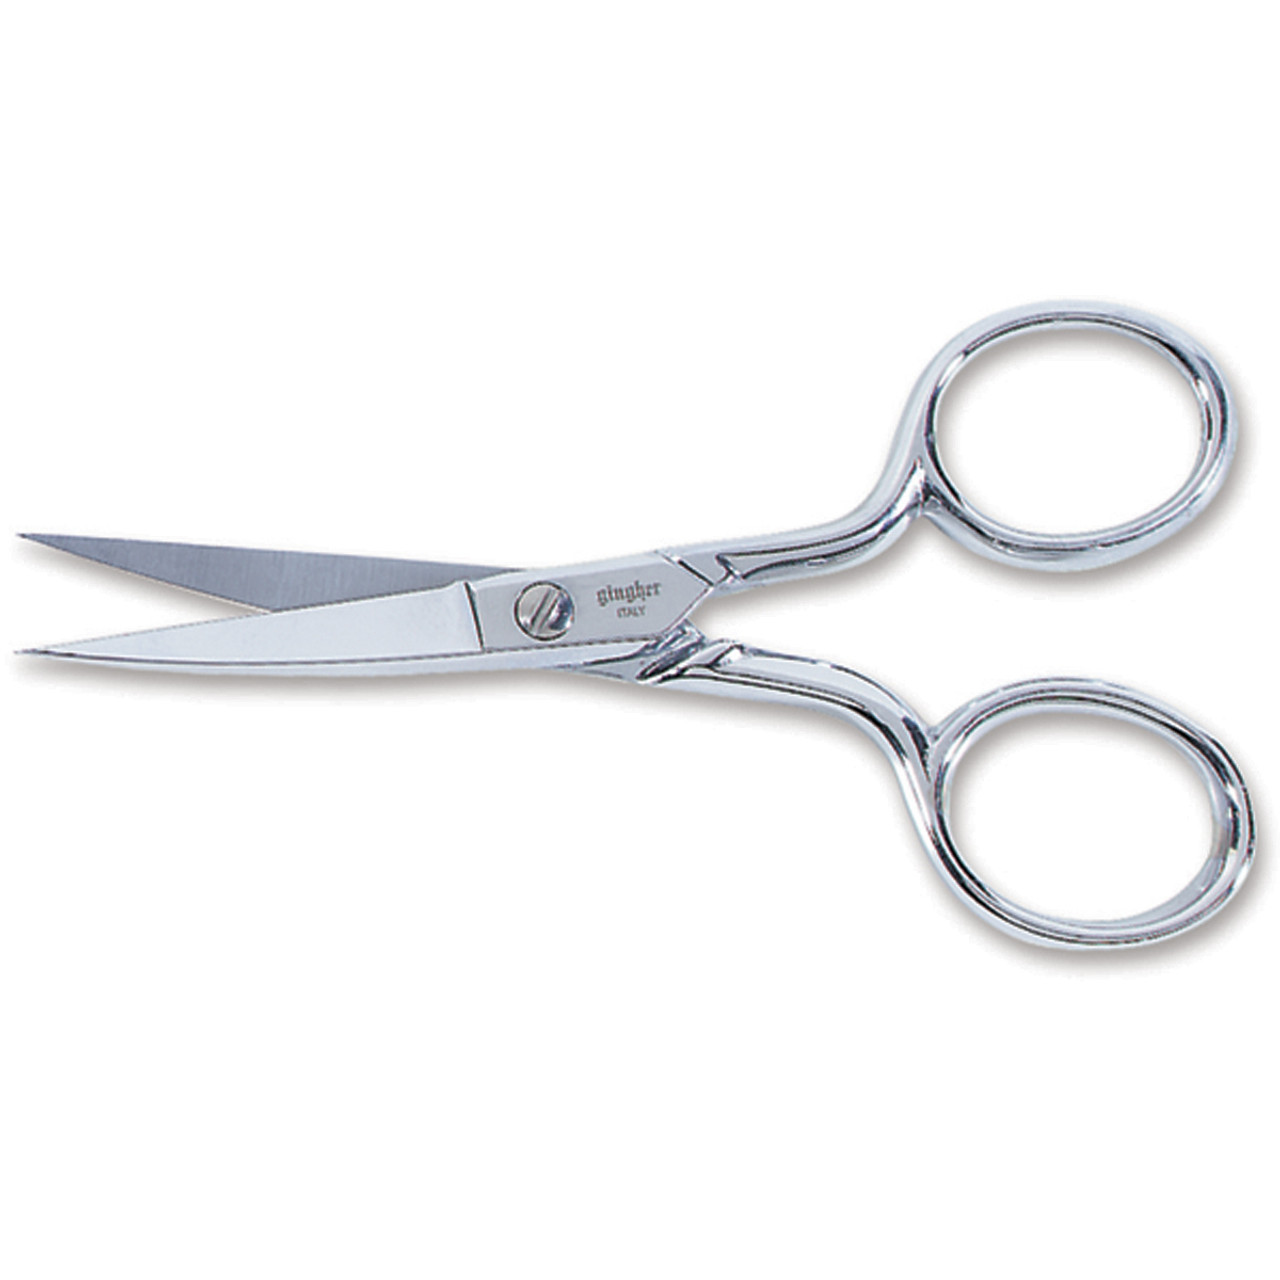 Gingher Knife Edge Craft Scissors 5-W/Leather Sheath